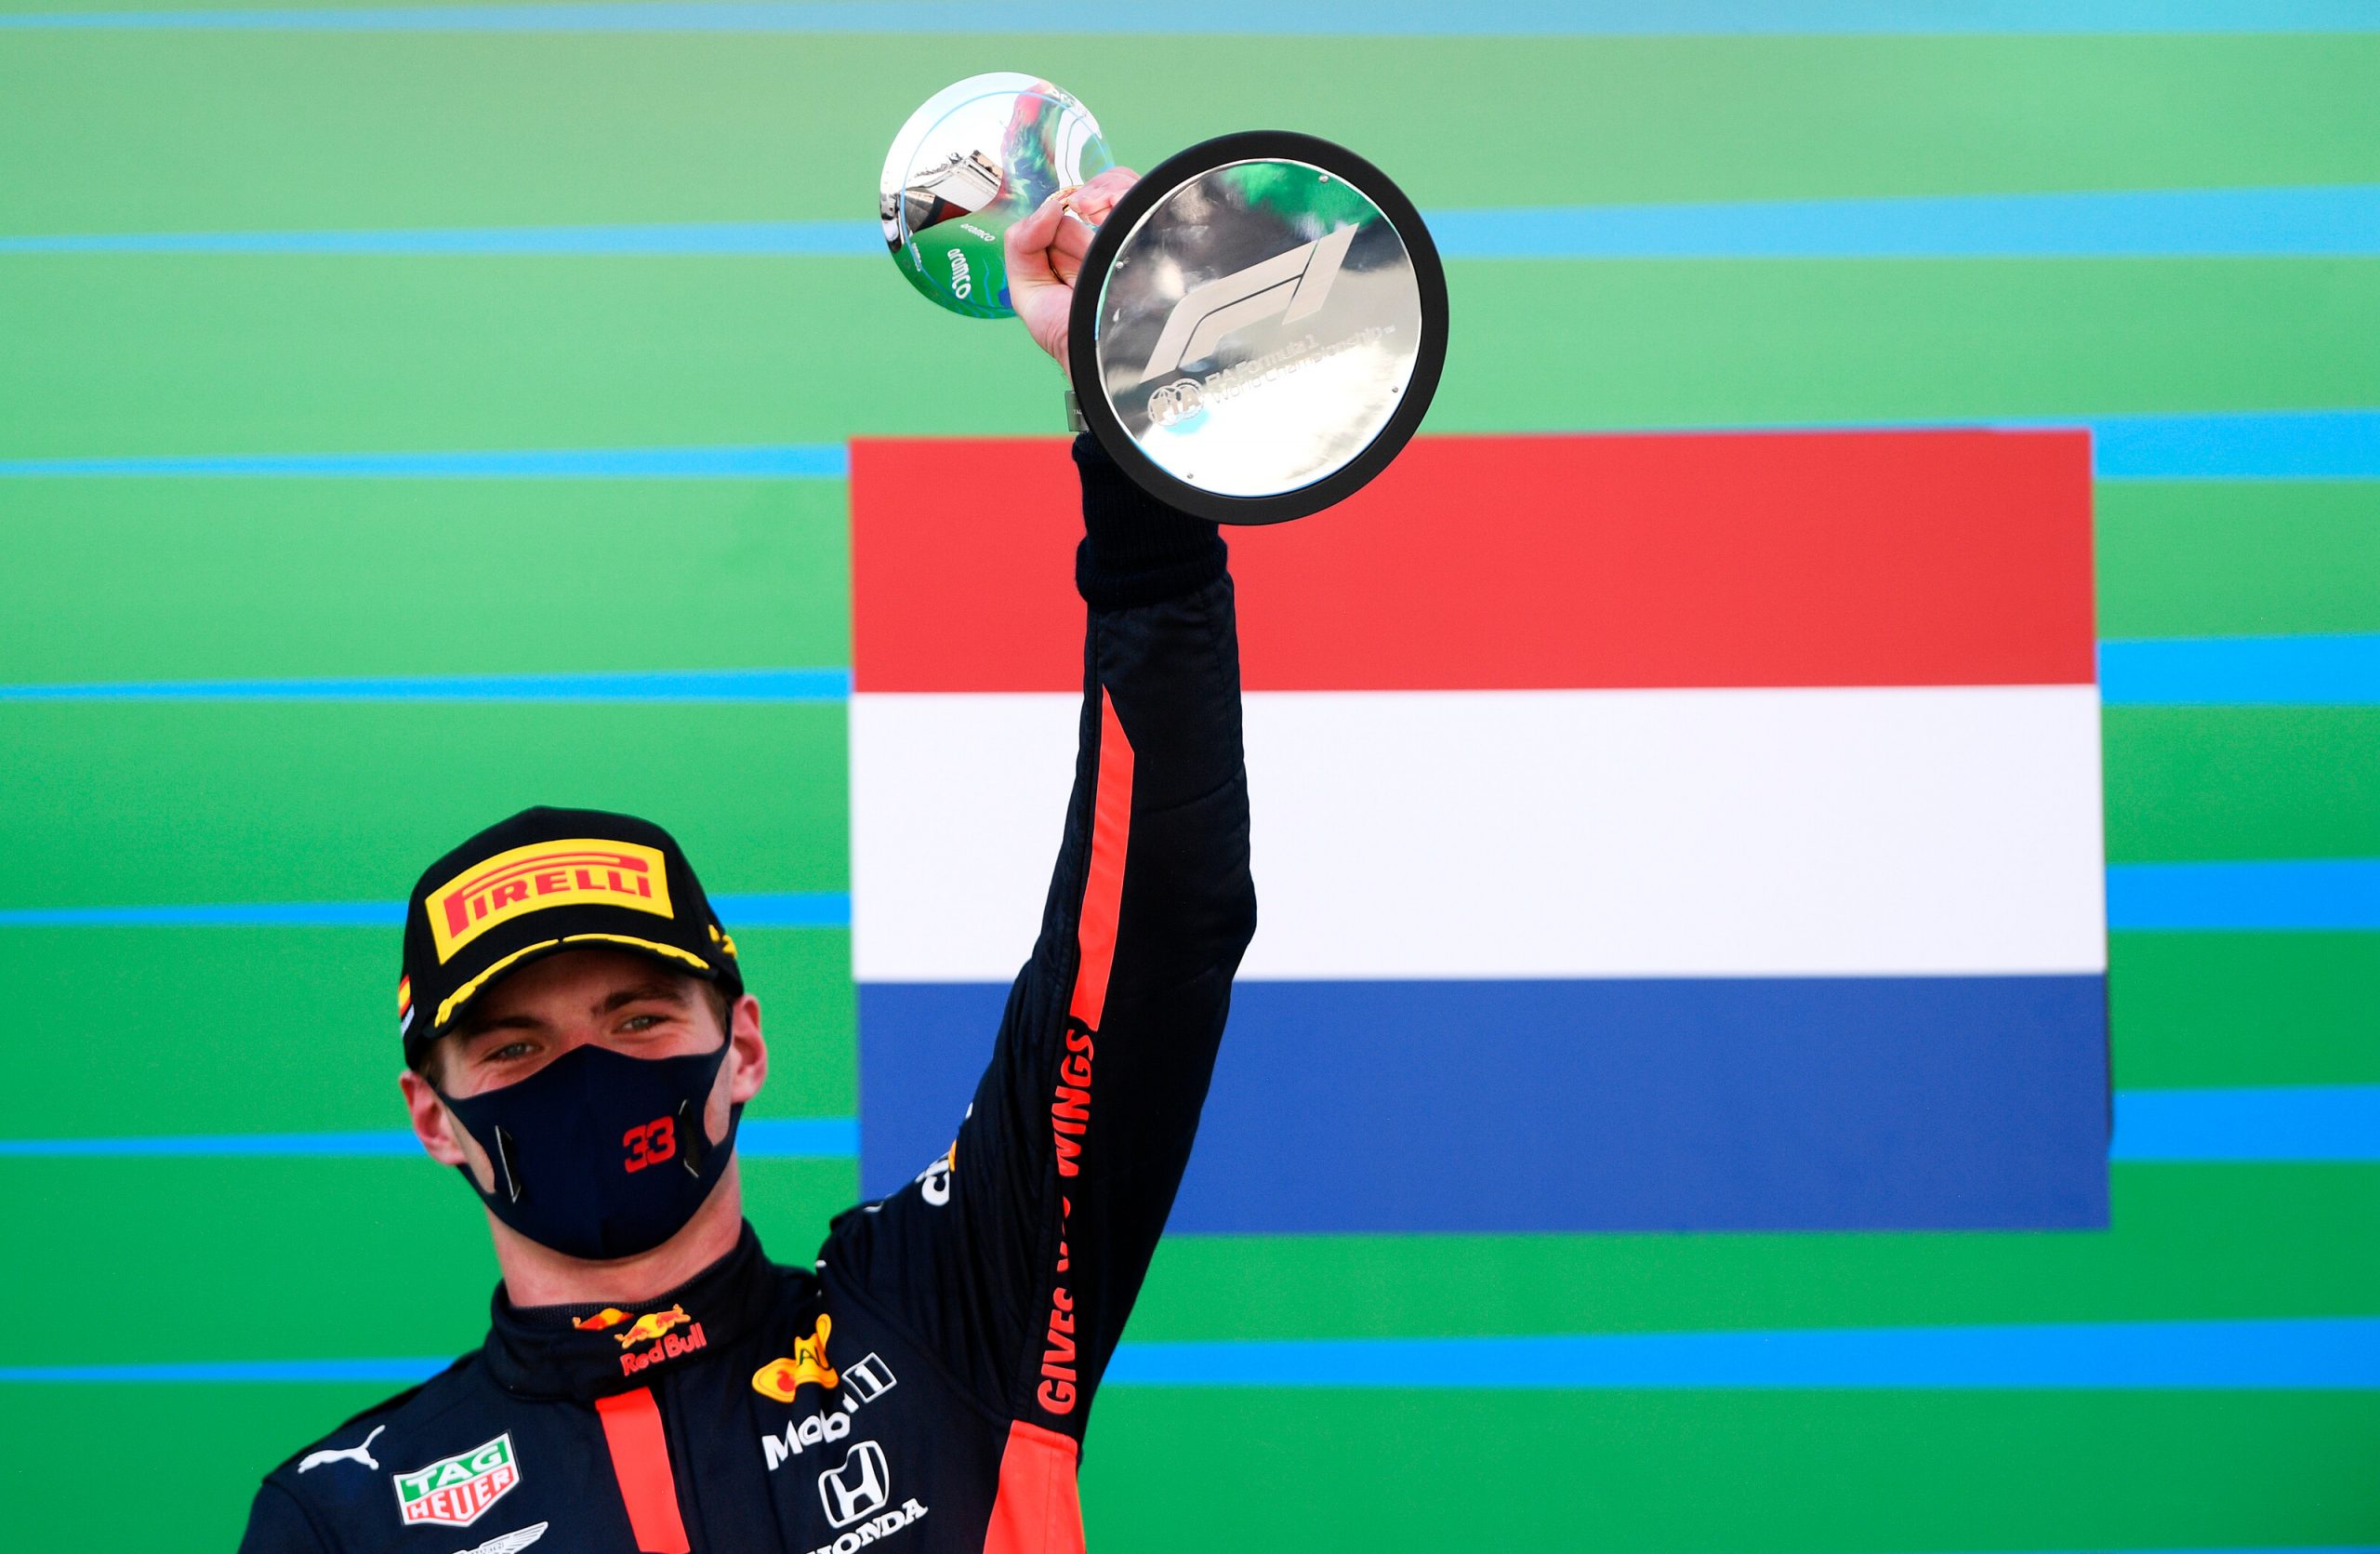 2020 Spanish Grand Prix, Sunday - Max Verstappen (image courtesy Red Bull Racing)